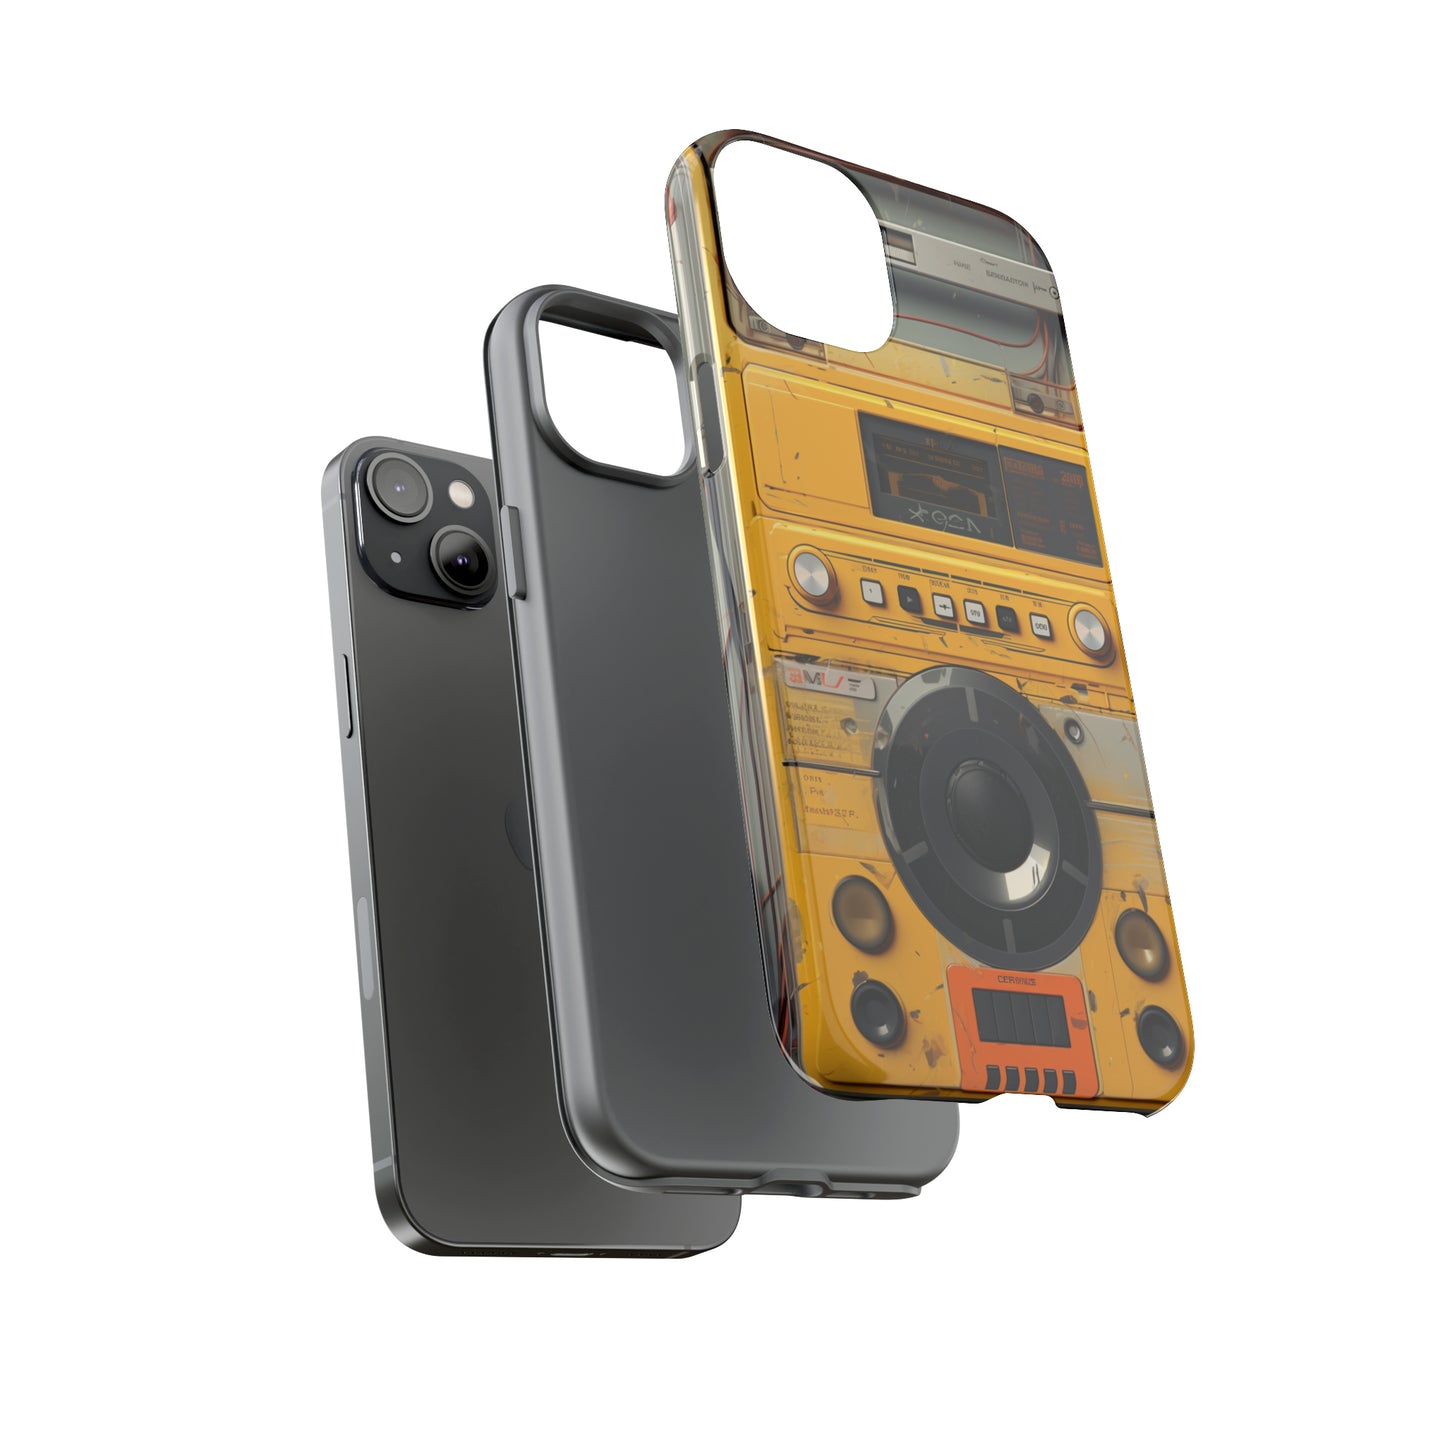 Cyberpunk Techno Gadget Walkman: Premium Phone Tough Case for iPhone, Samsung Galaxy, and Google Pixel